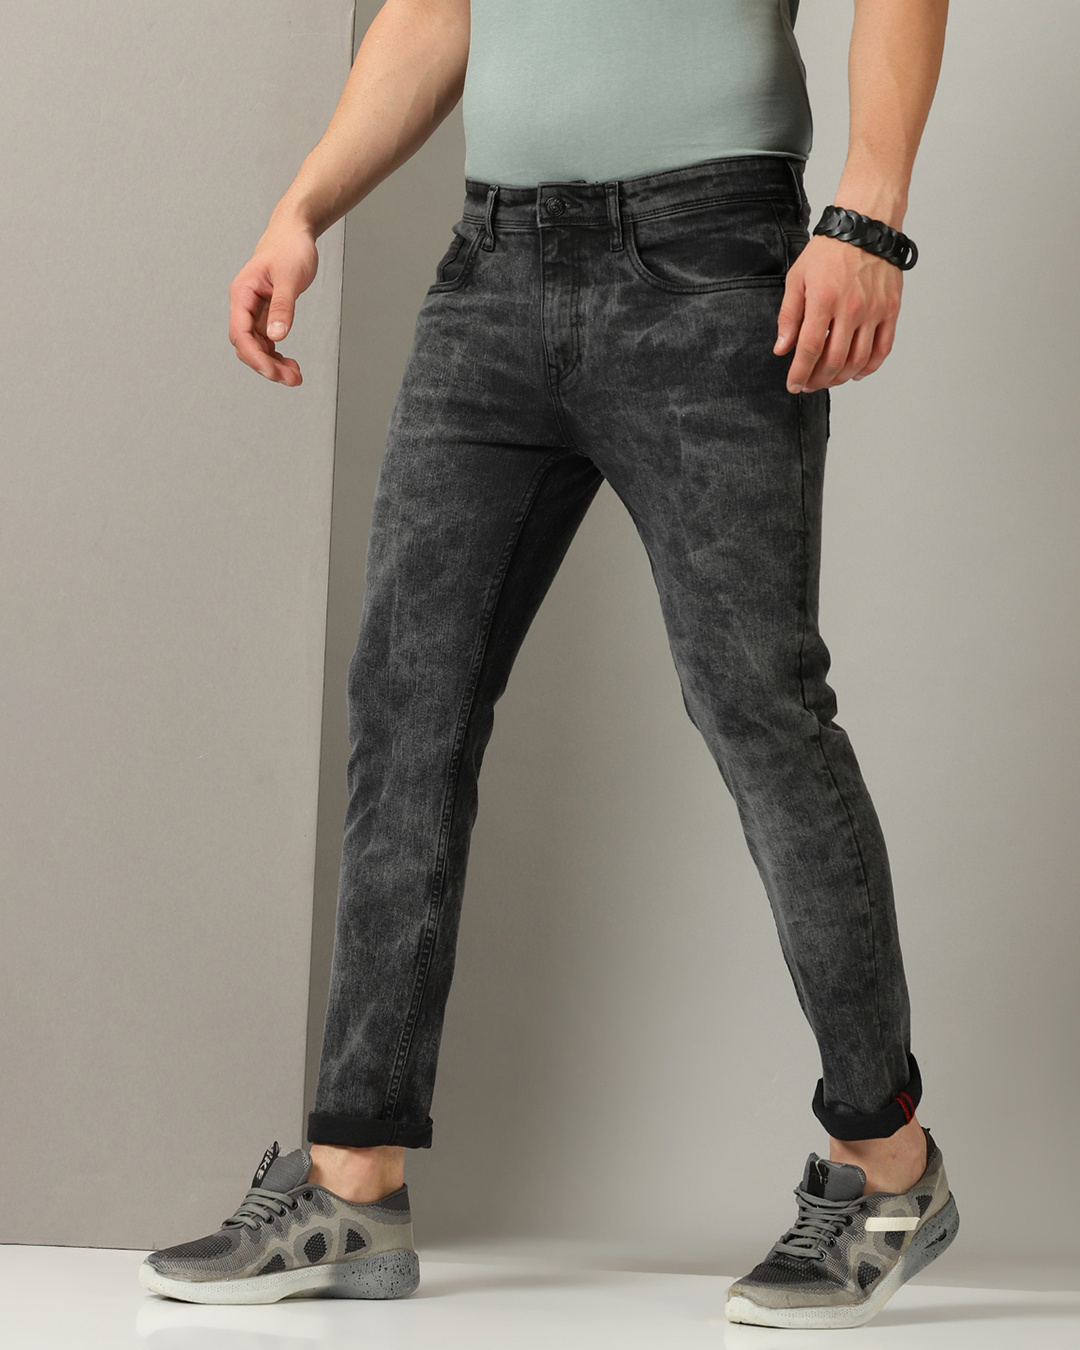 Buy Men's Black Washed Skinny Fit Jeans Online at Bewakoof